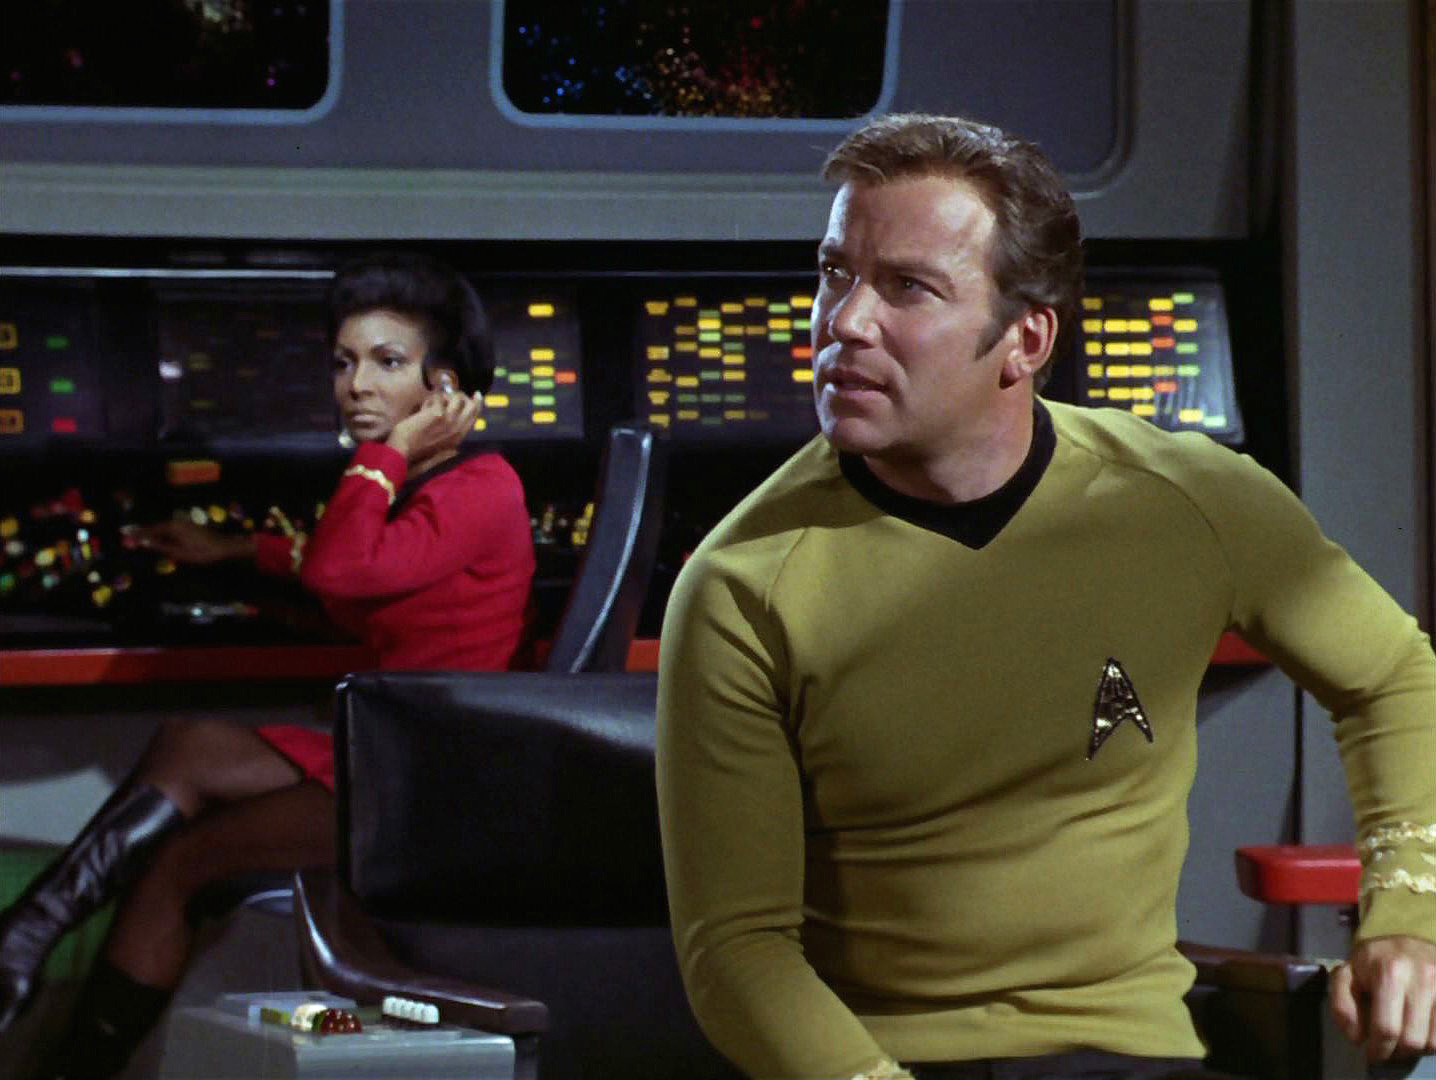 Uhura and James Kirk